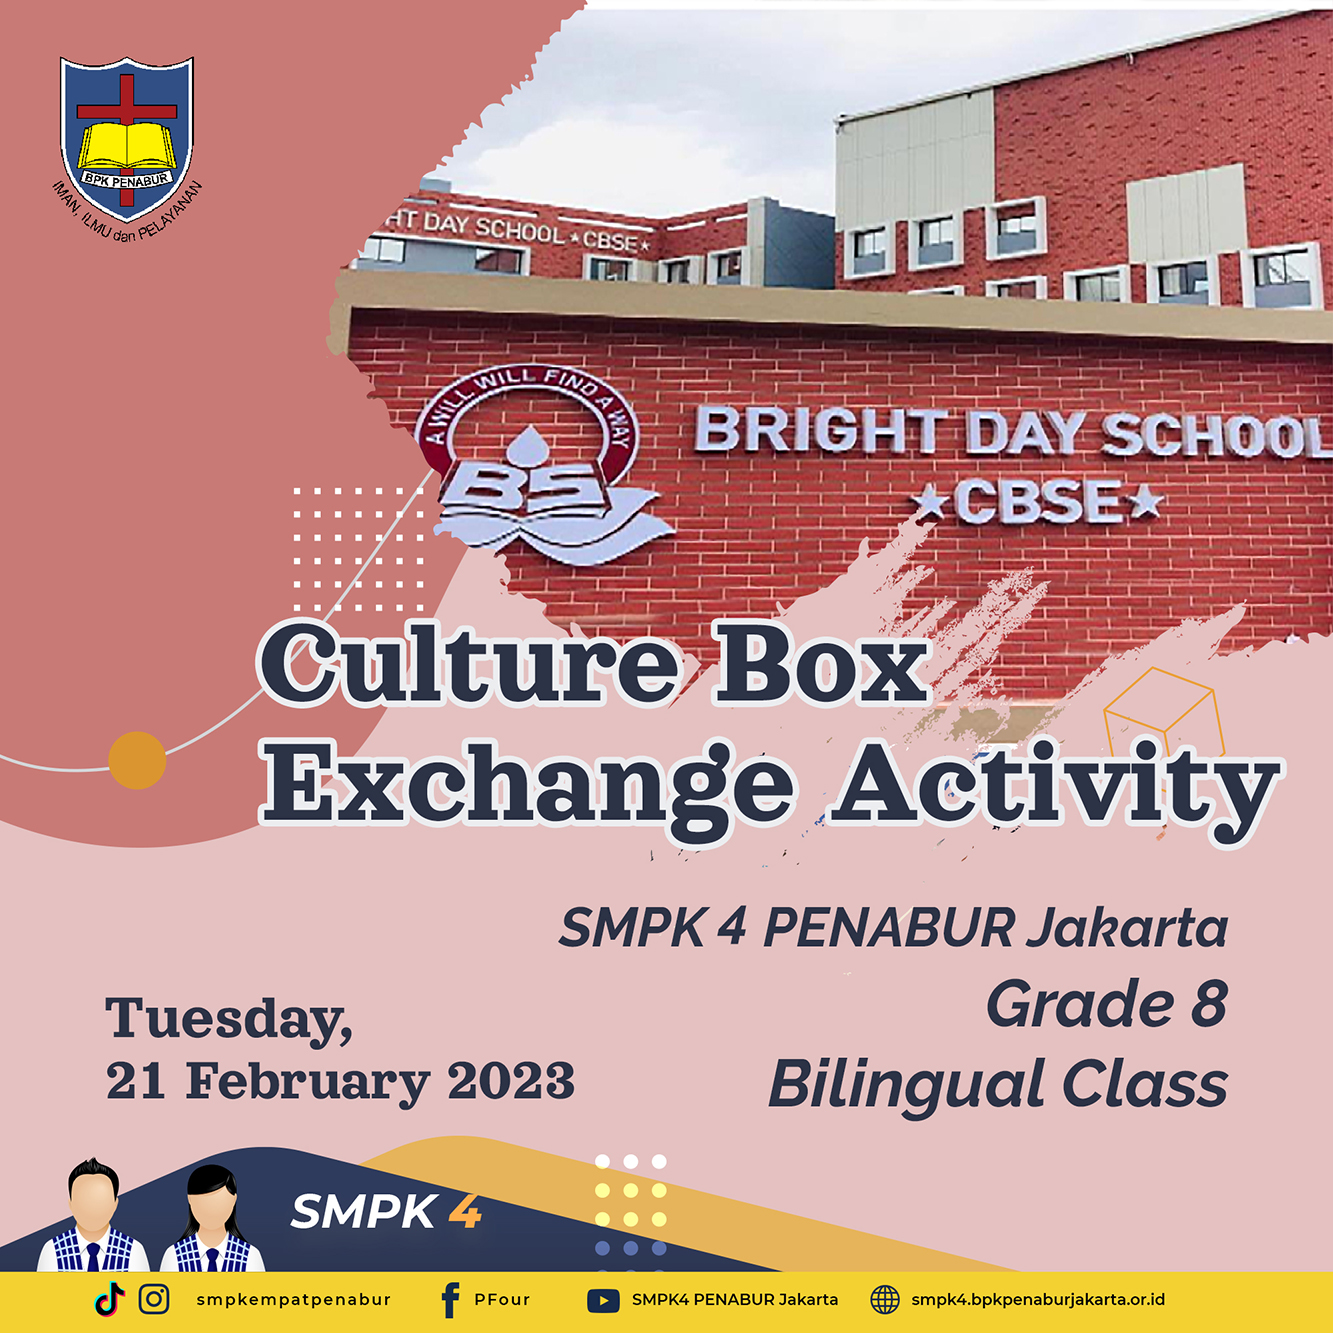 Cultural Box Exchange Activity - Grade 8 Bilingual Class